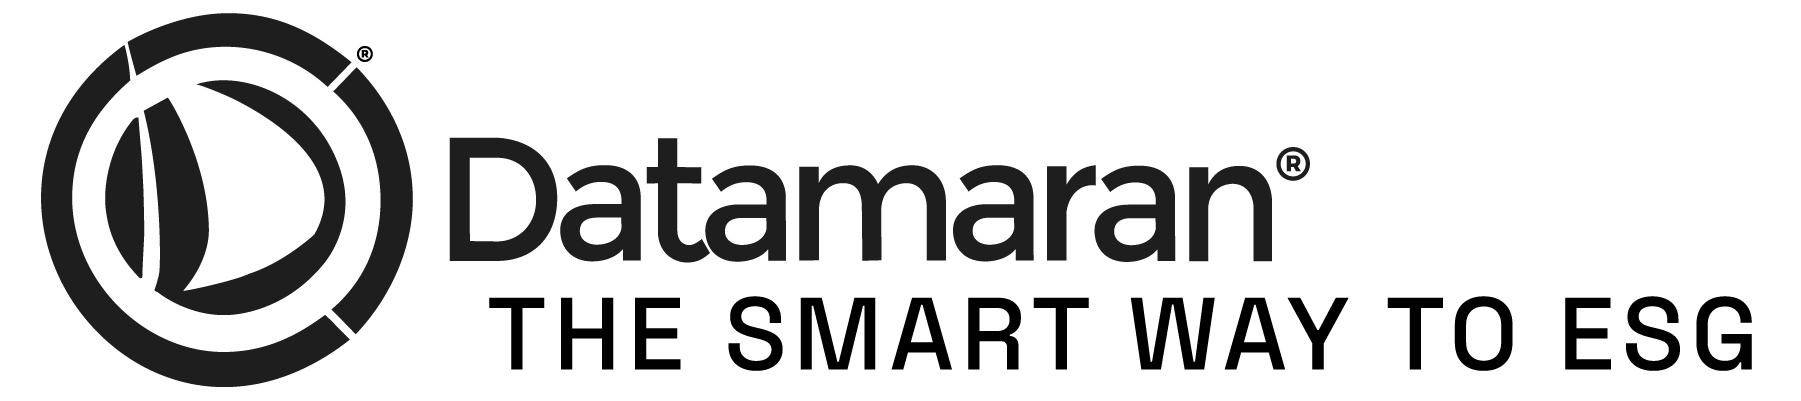 Datamaran - The Smart Way to ESG - Black Logo